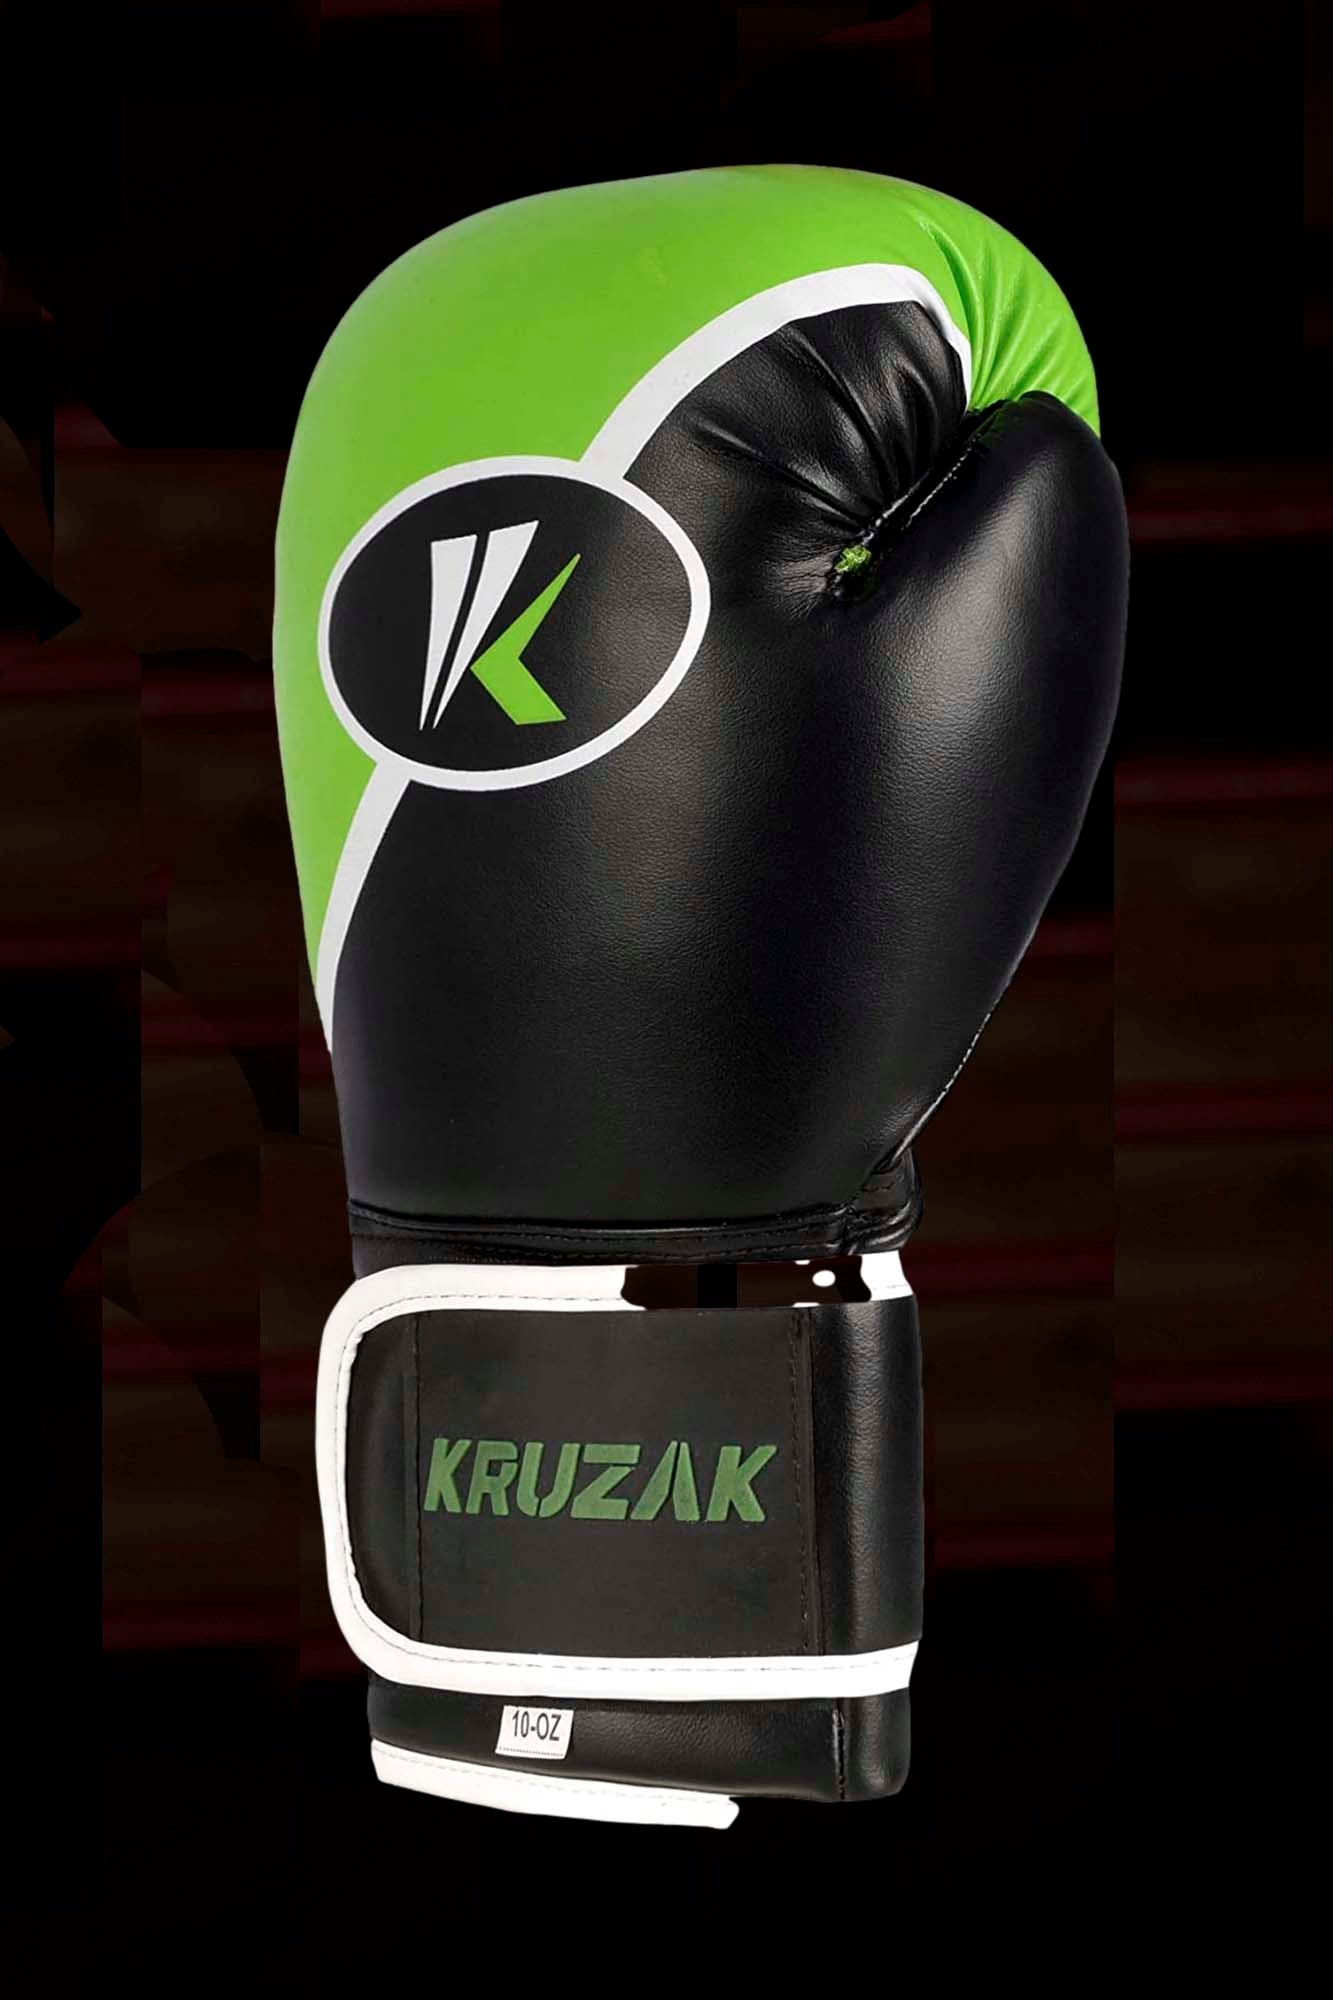 Premium Black-Green Training Gloves & Focus Mitts Set for Boxing, Muay Thai, Kick Boxing & MMA Fighting